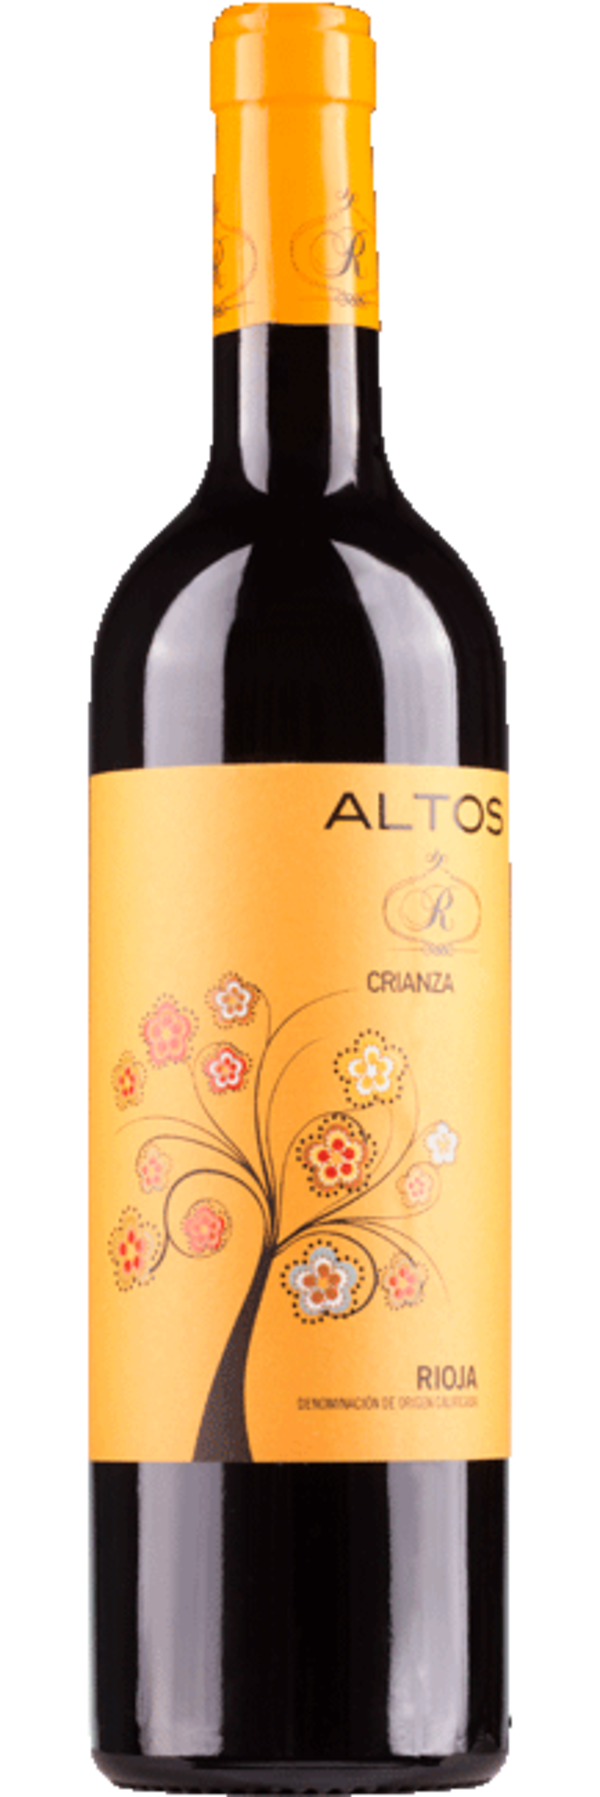 Altos R Rioja Crianza 2019